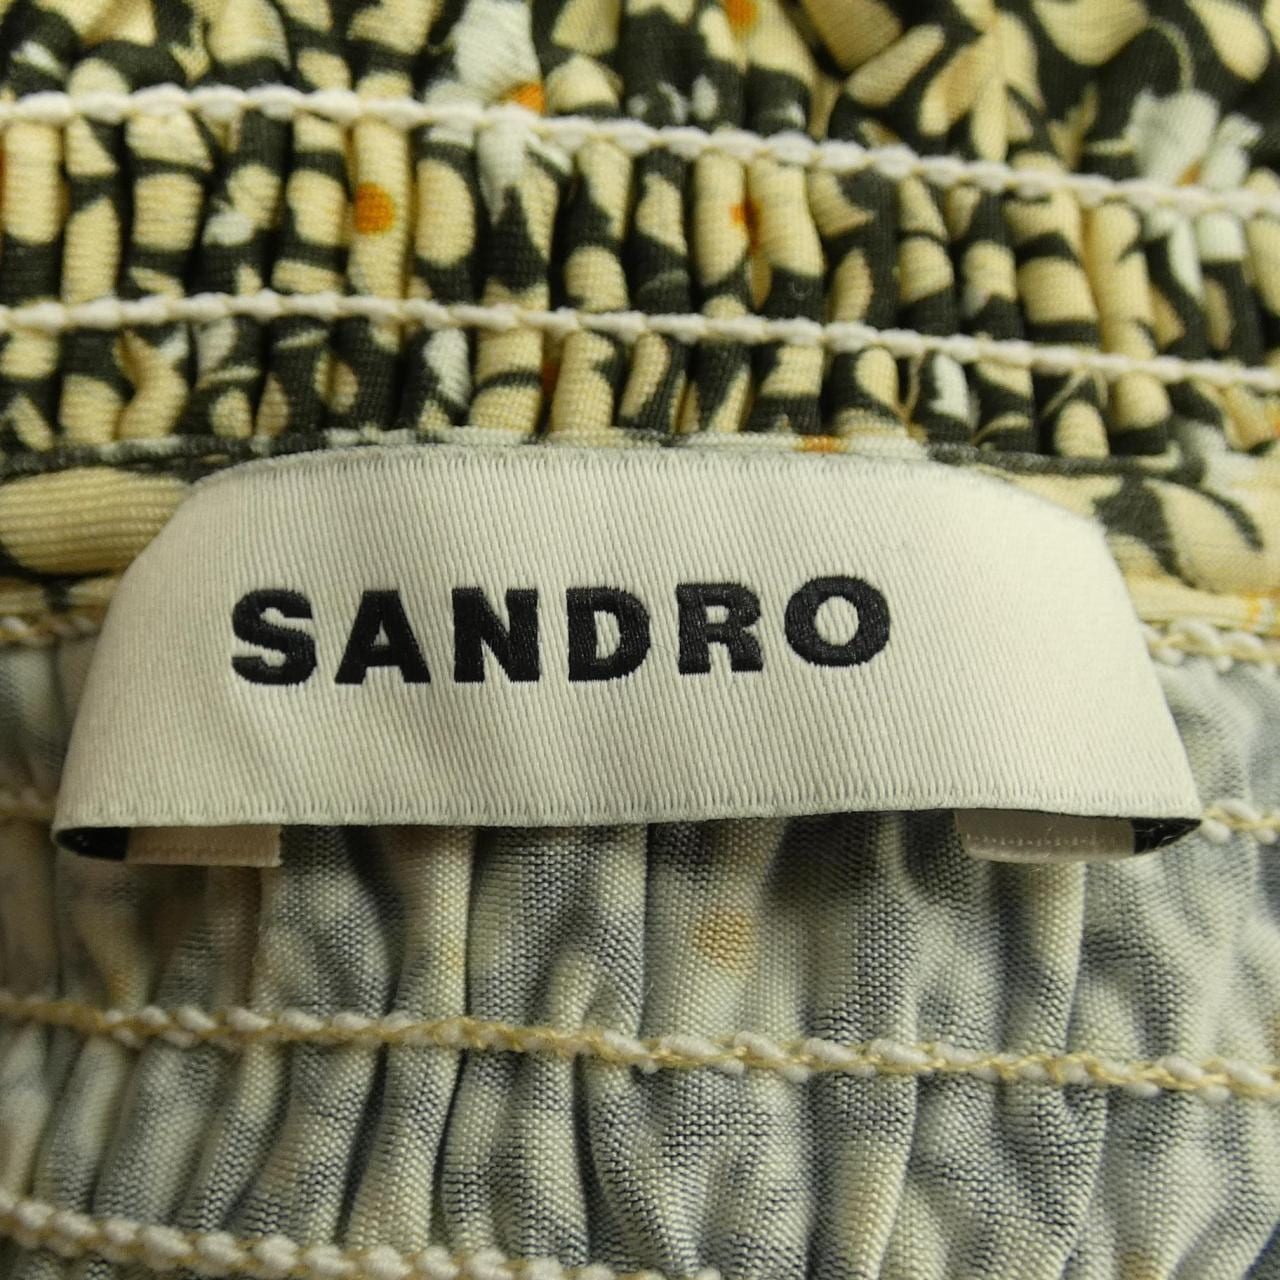 SANDRO tops